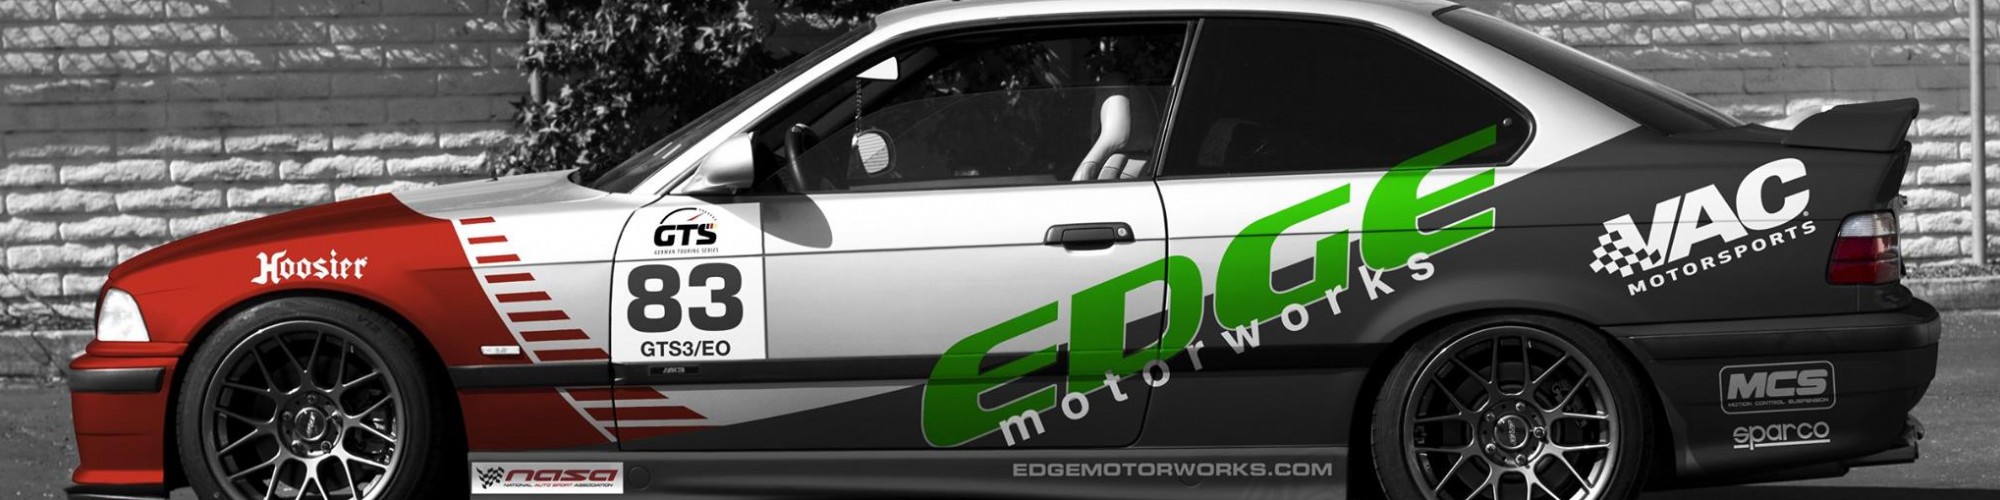 EDGE Motorworks cover image